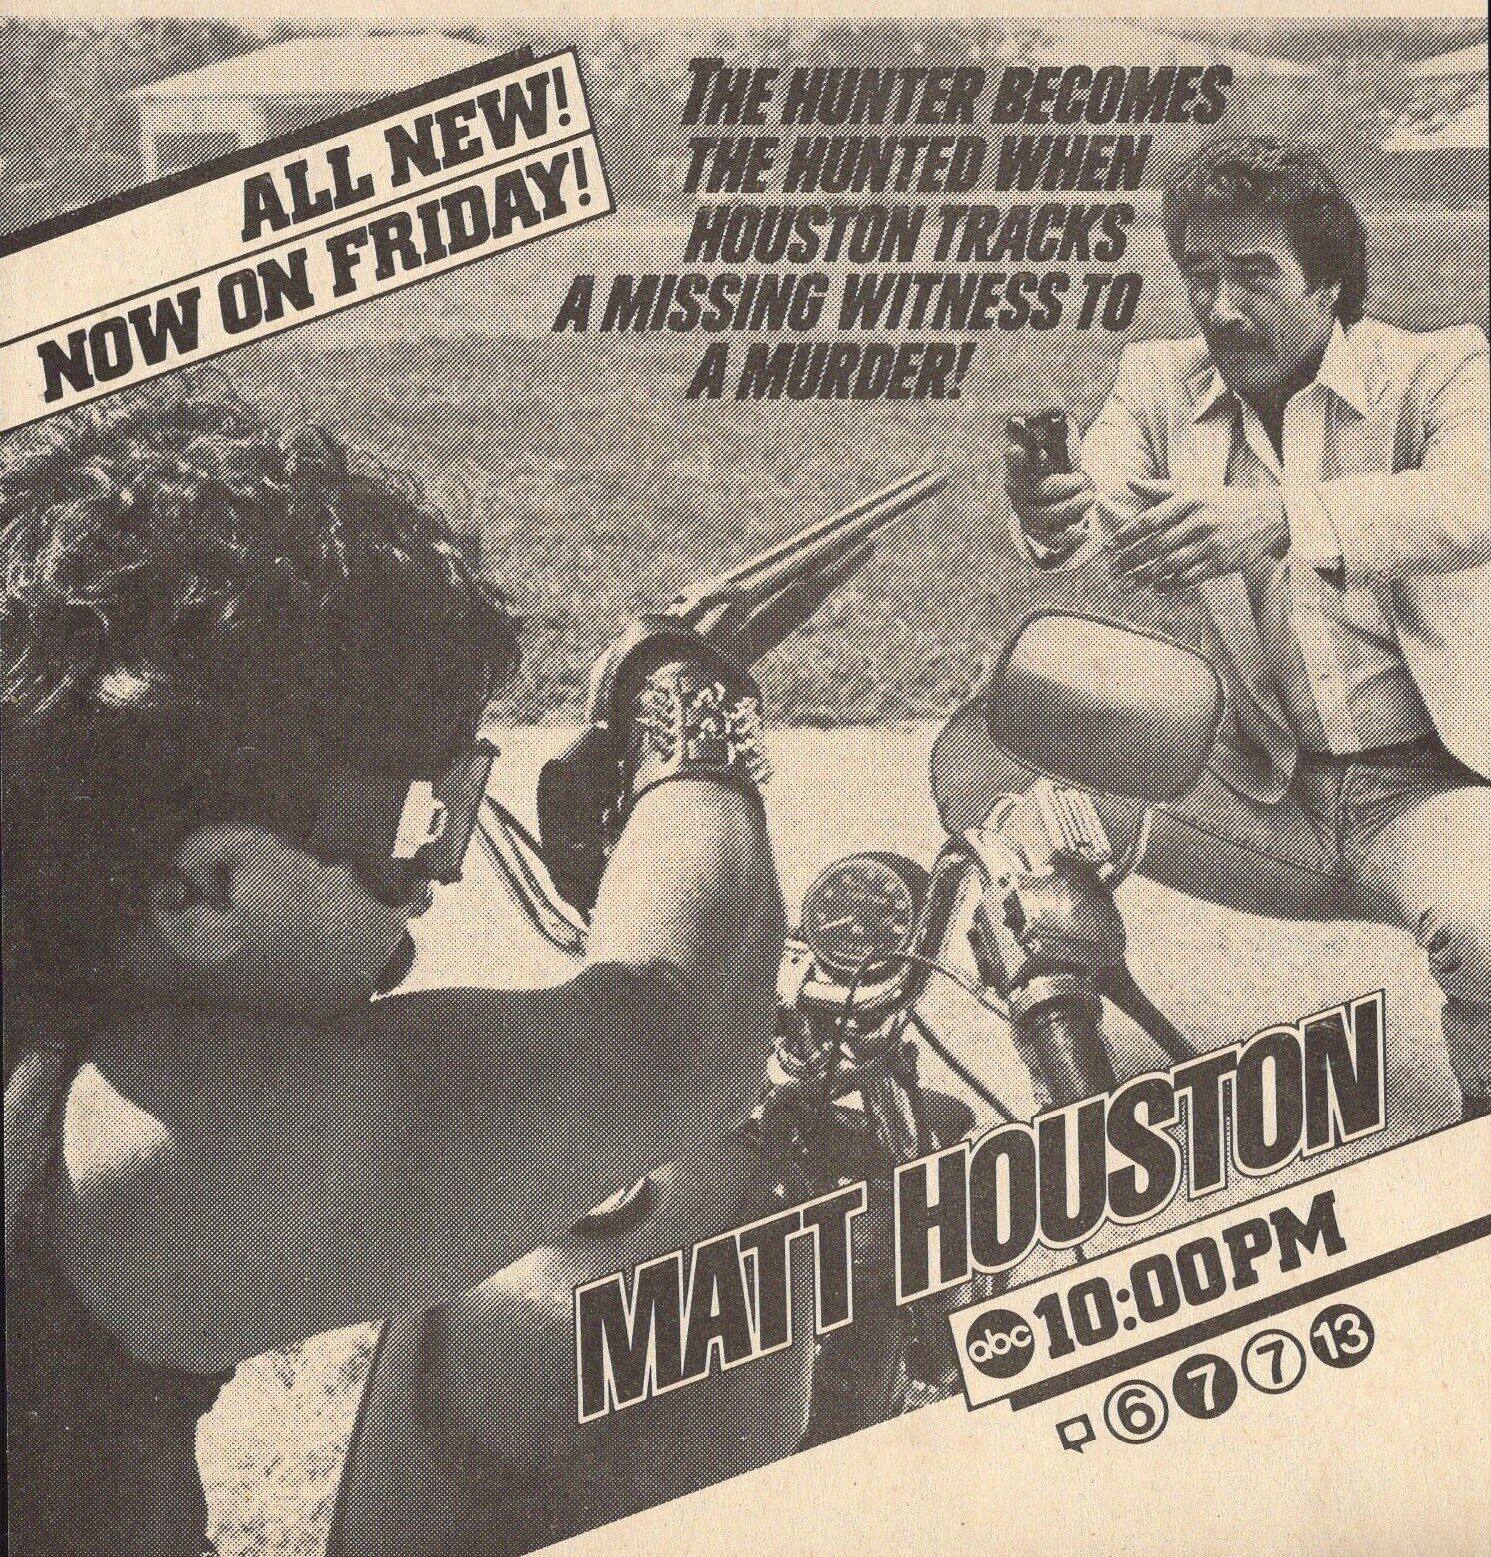 1983 ABC TV AD~MATT HOUSTON LEE HORSLEY The Hunted Becomes The Hunted